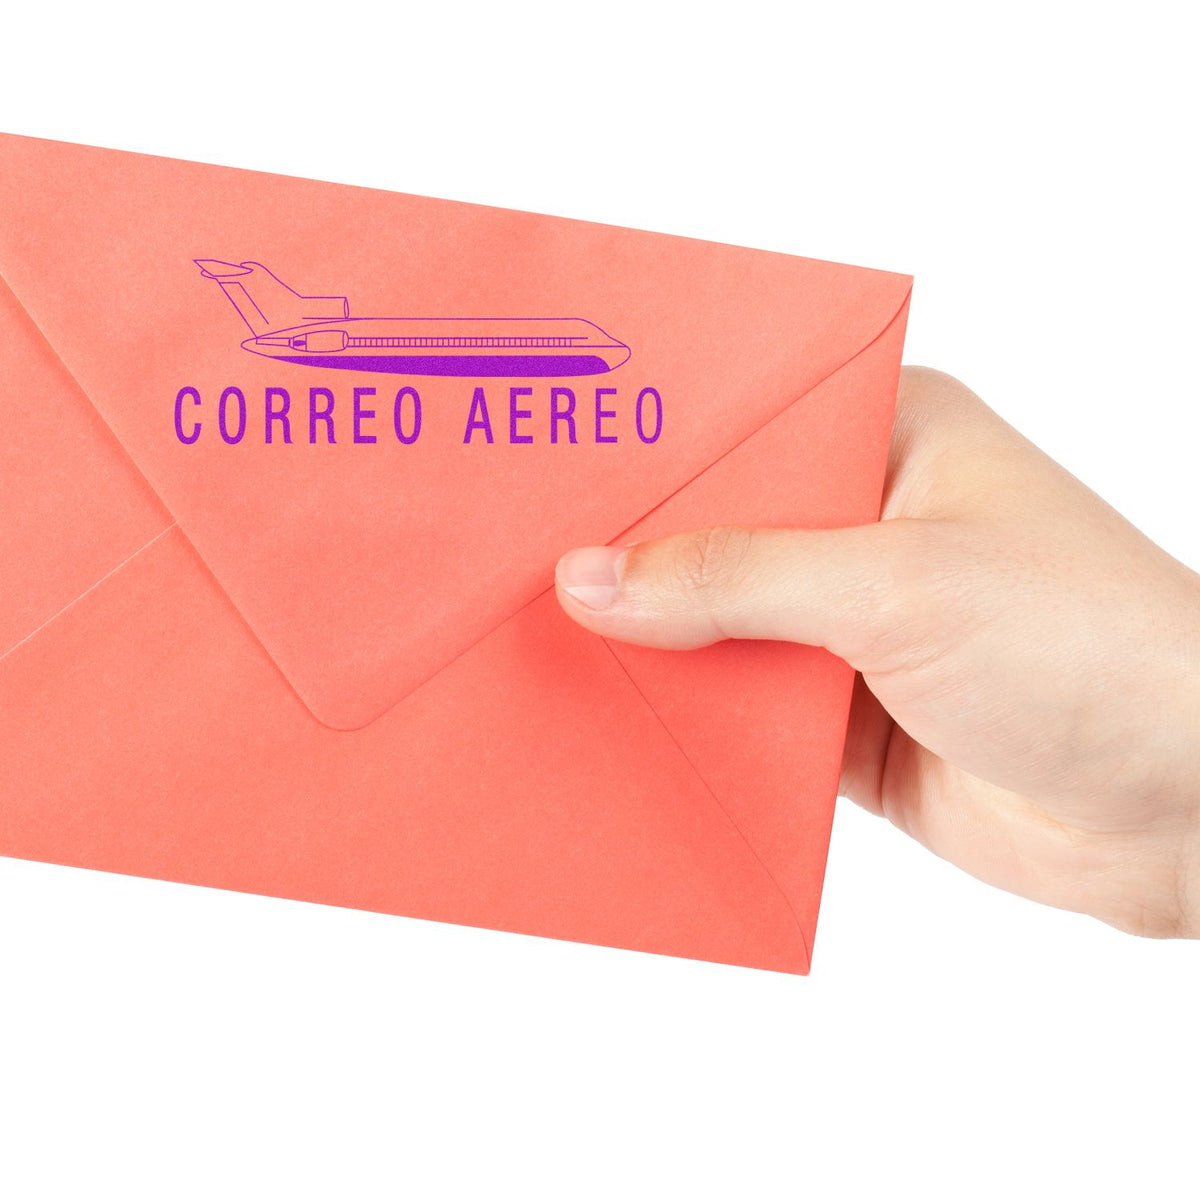 Large Self-Inking Correo Aero Stamp In Use